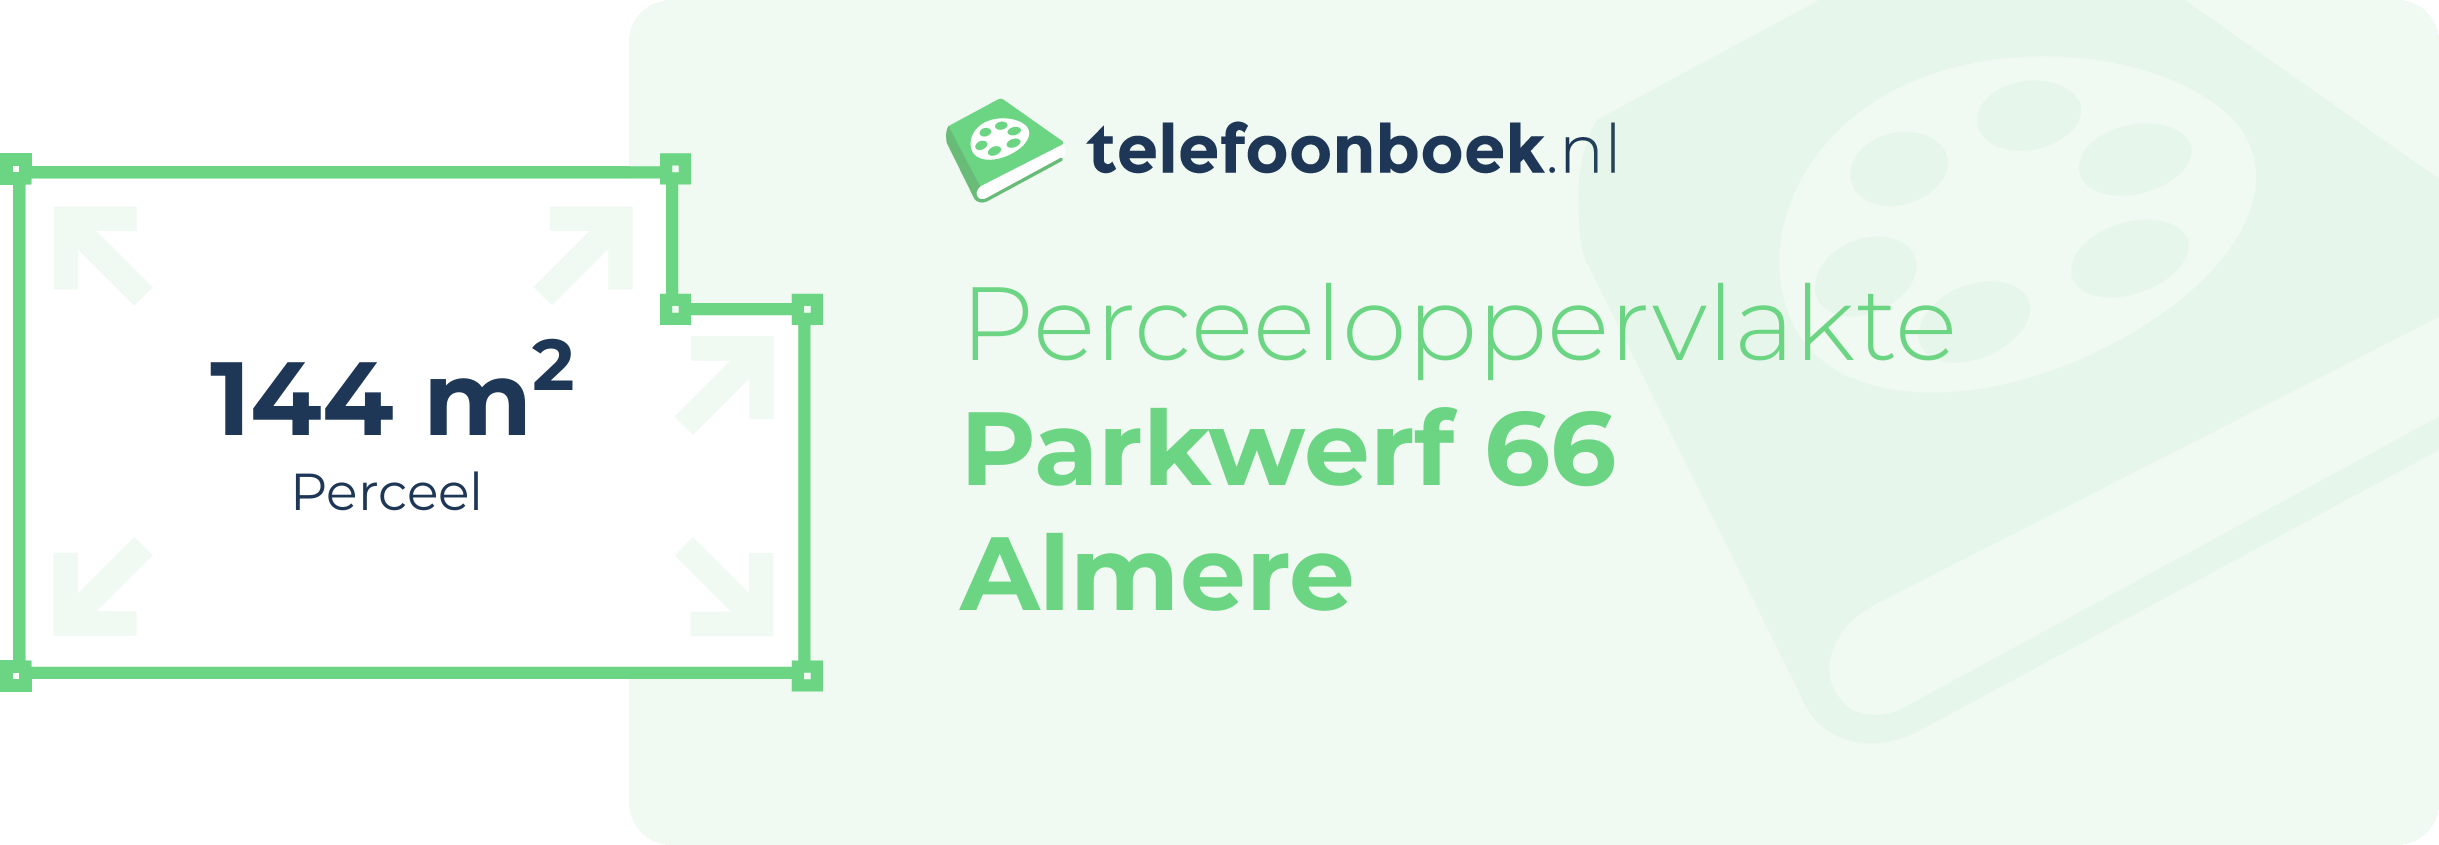 Perceeloppervlakte Parkwerf 66 Almere